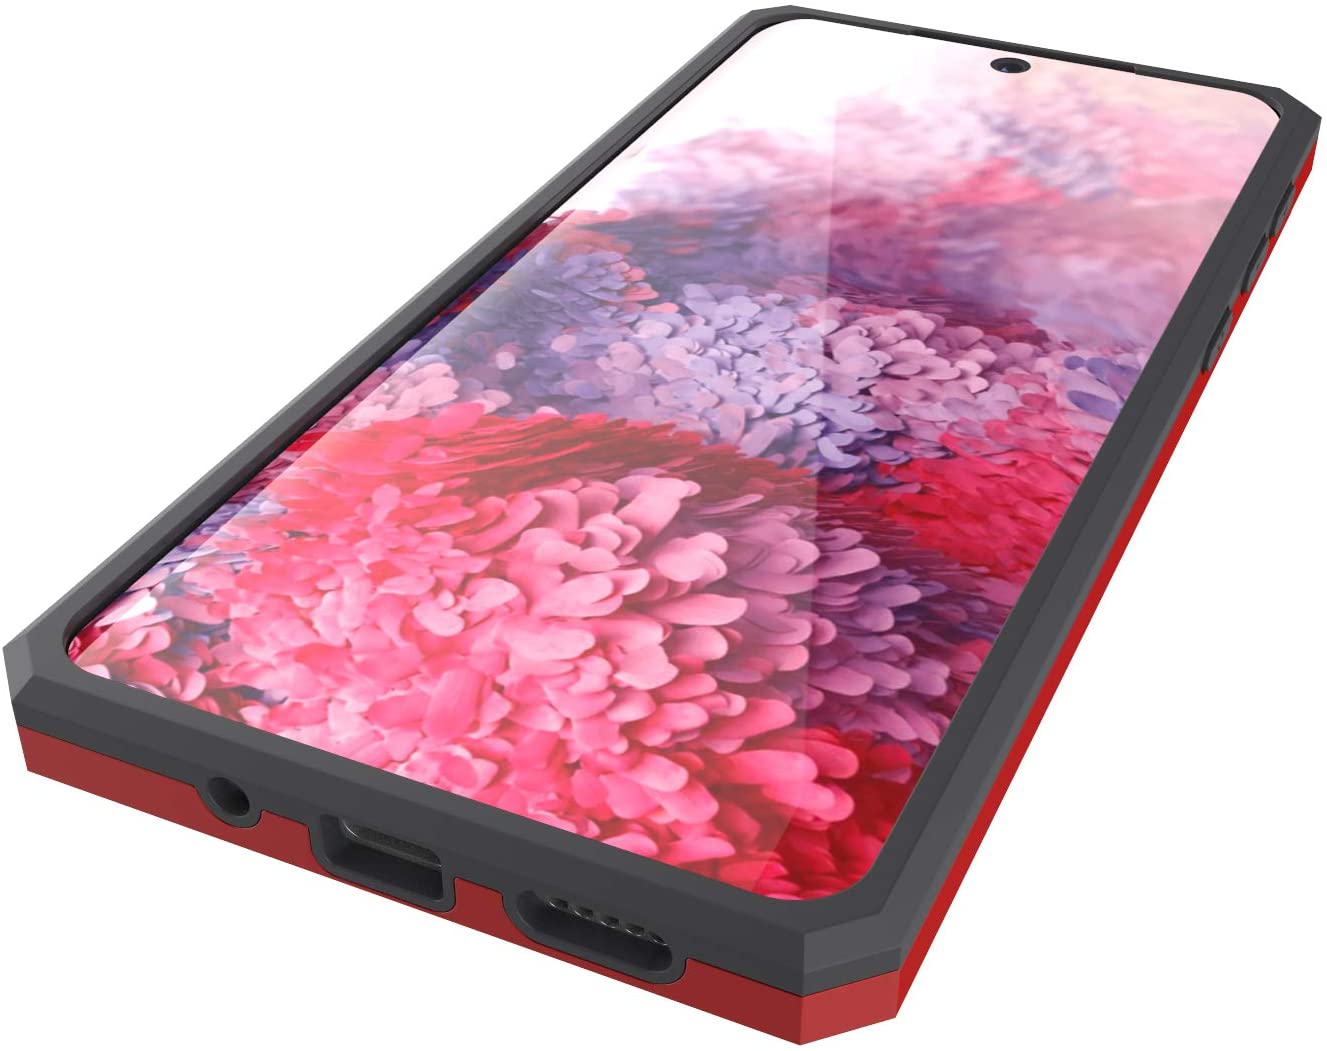 Samsung Galaxy S20 FE Hard Case Red